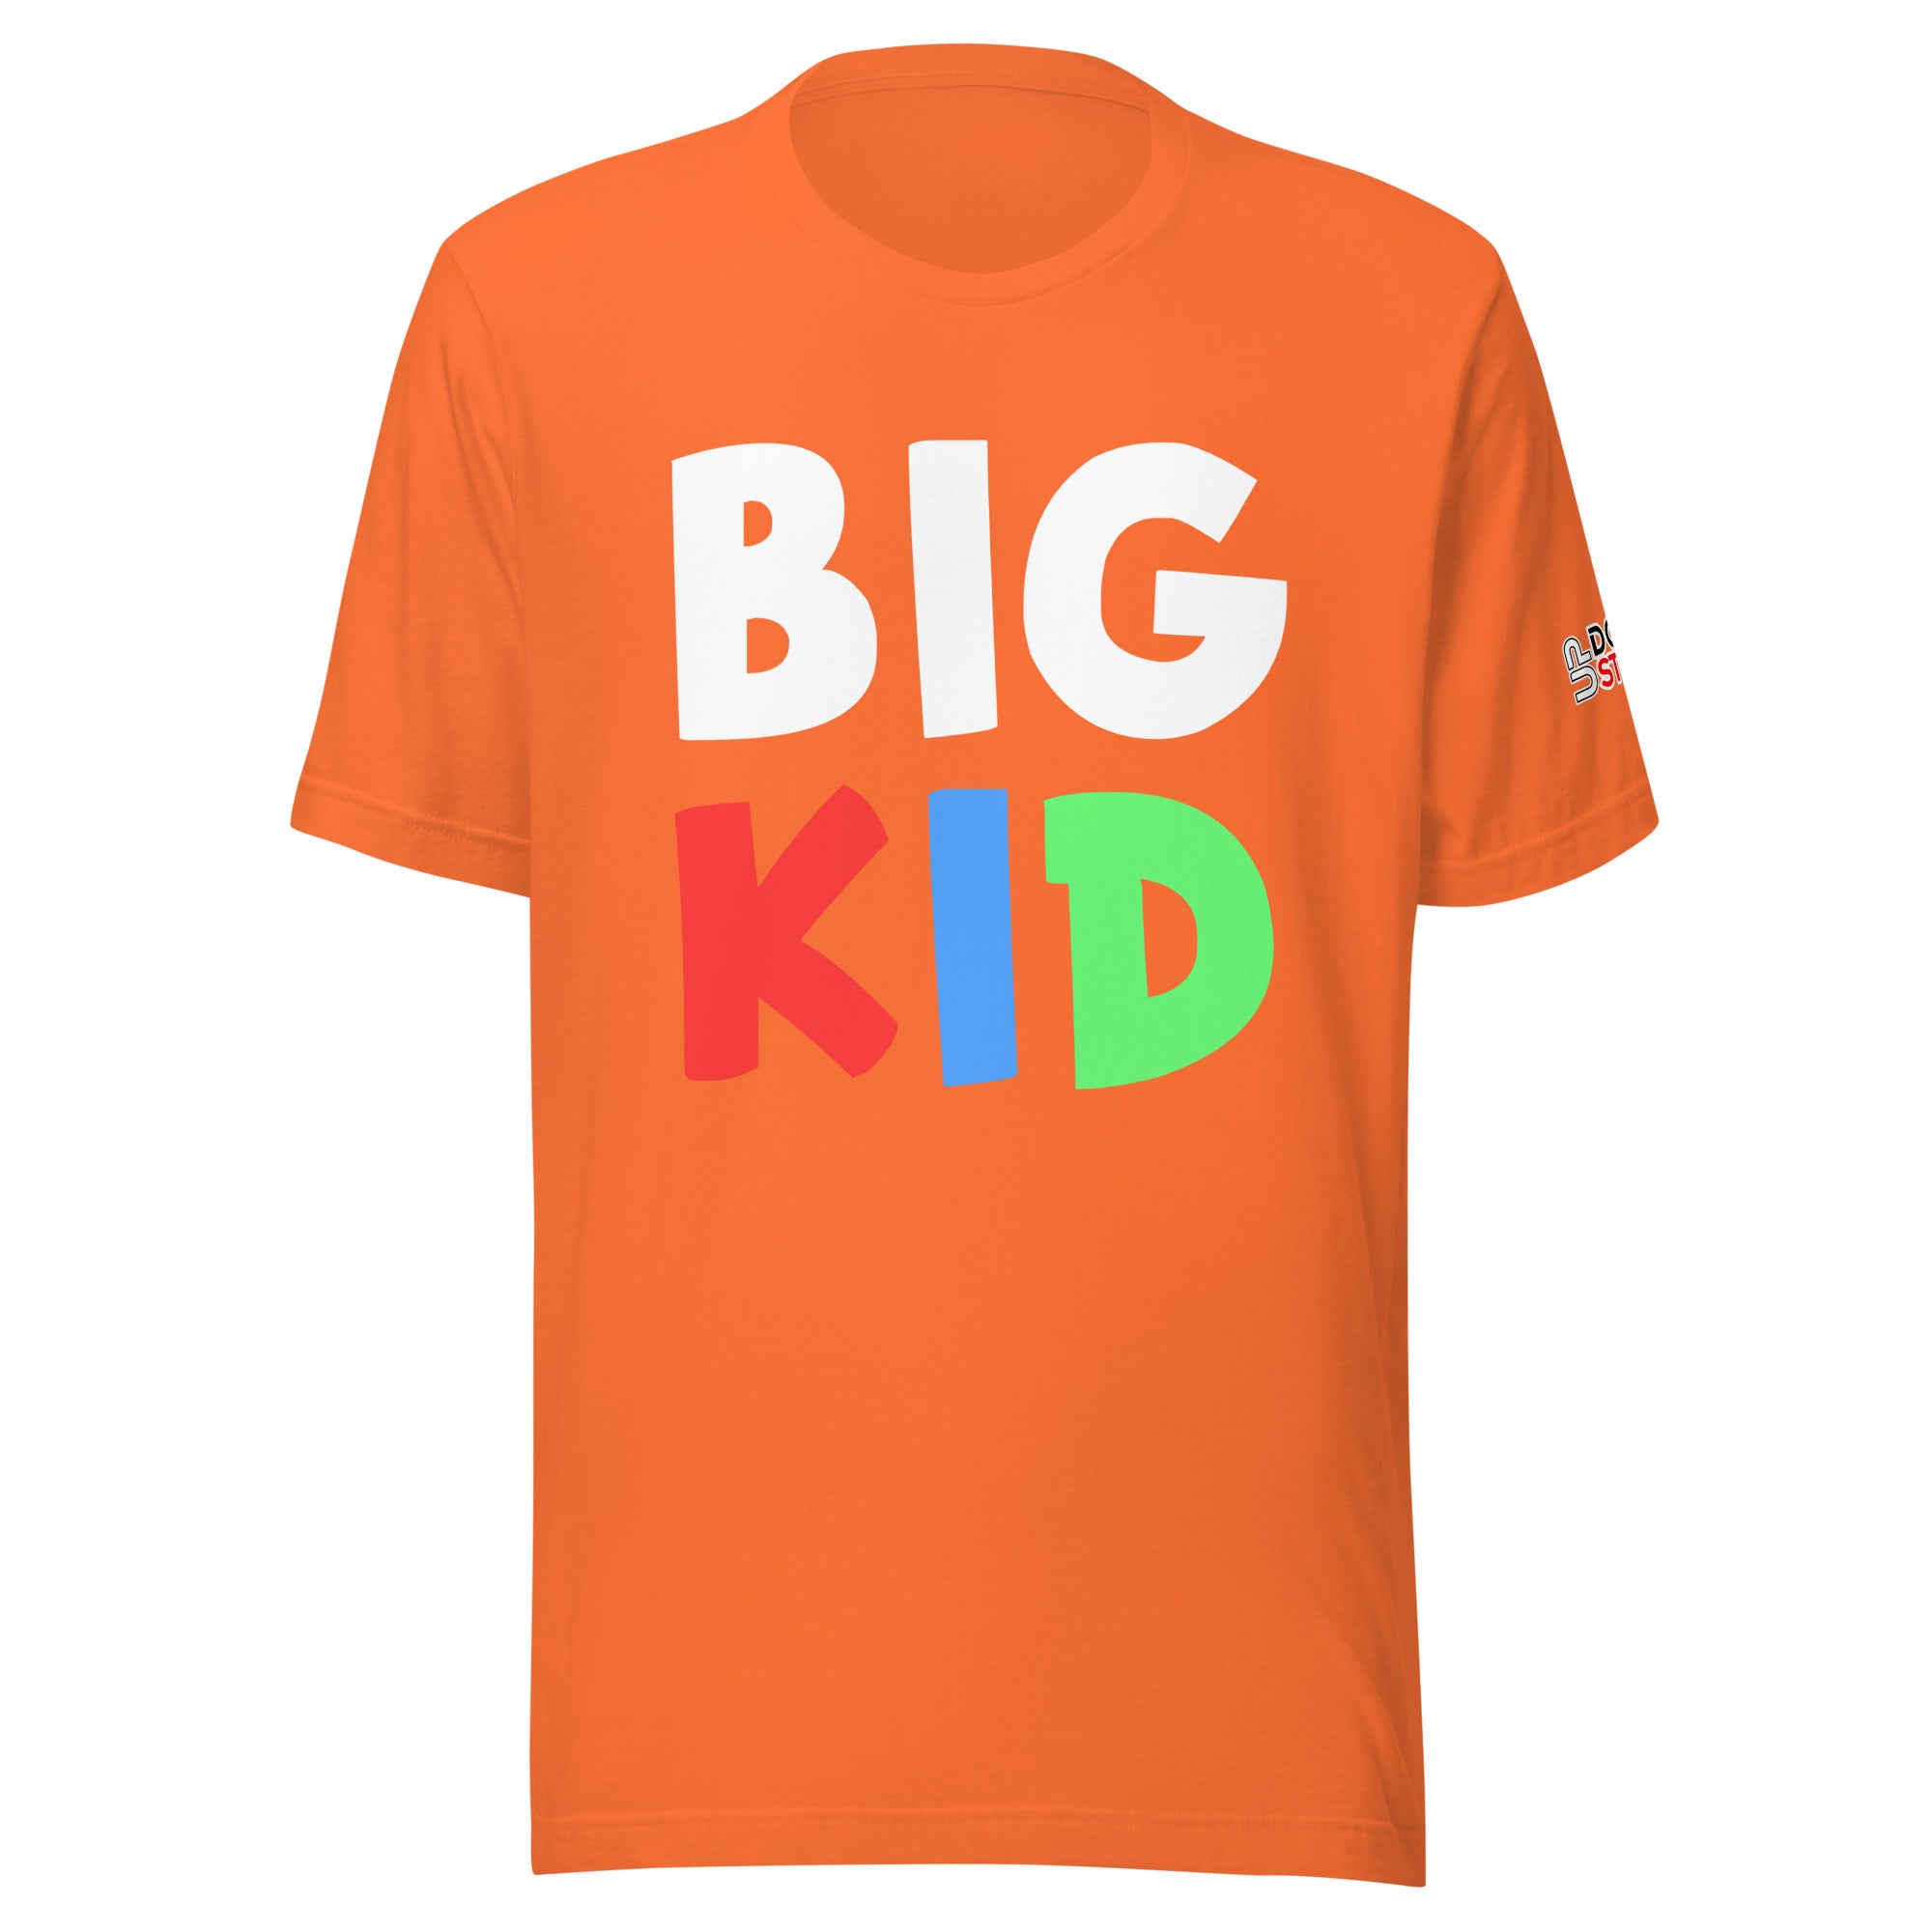 Big Kid / T-Shirt